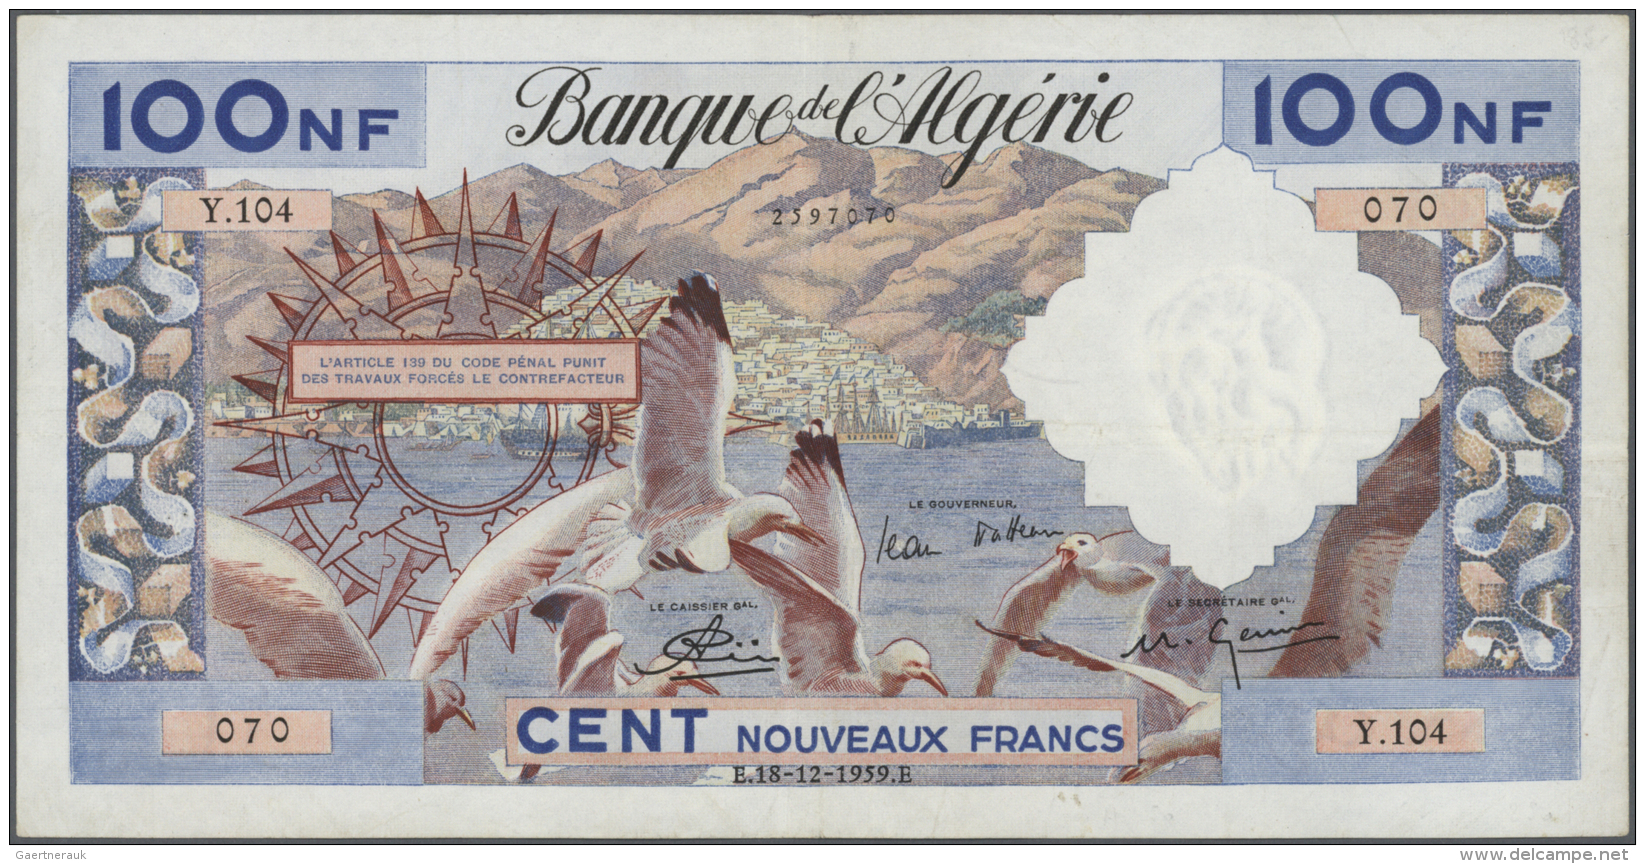 Algeria / Algerien: 100 Nouveaux Francs 1959, P.121a, Very Nice Condition For The Large Size Formate Of This Note, Sever - Algérie